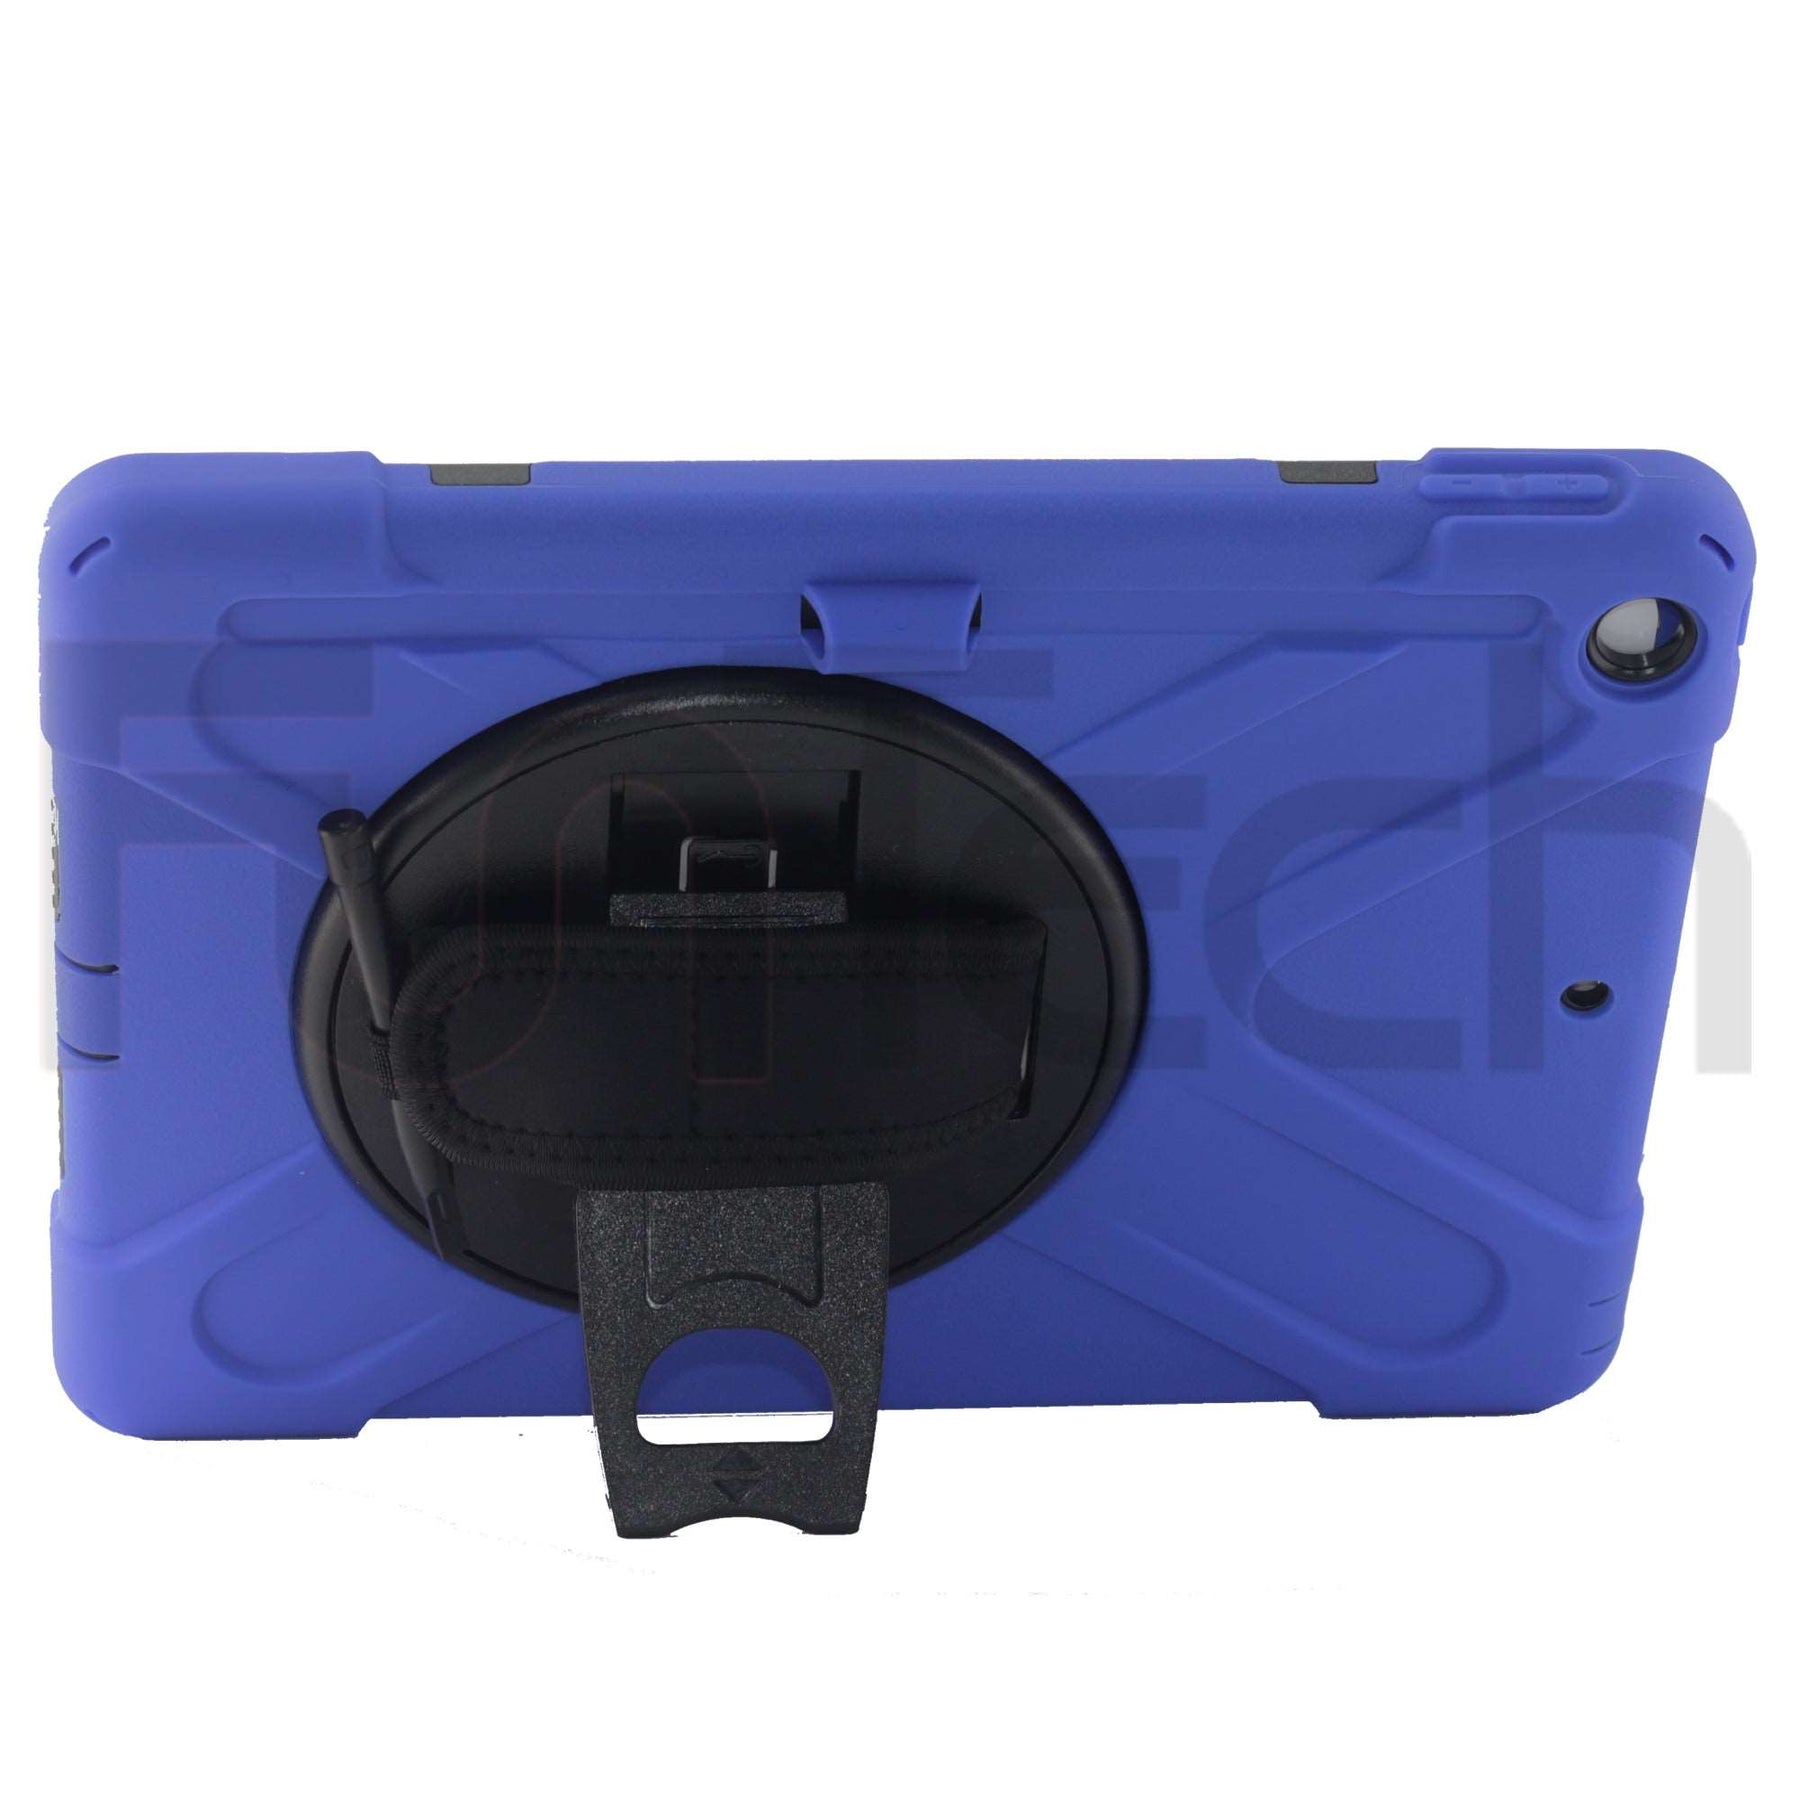 iPad 10.2 inch 2019/2020, 360` Hard Shockproof Case, Color Blue.